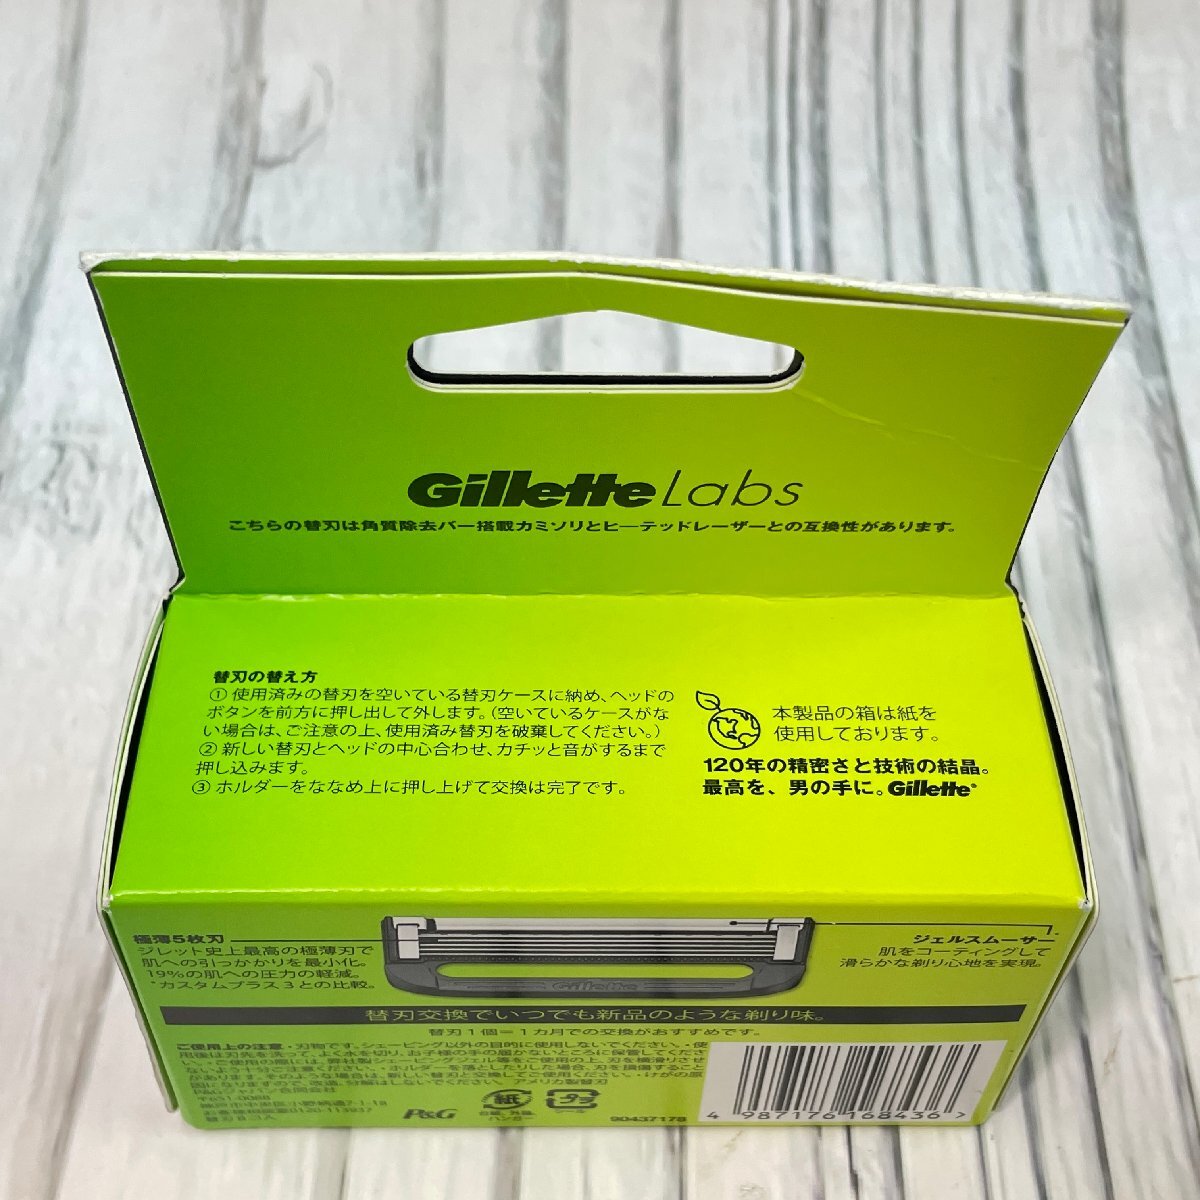 m002 D2(30) нераспечатанный Gillette Labs бритва 8 штук входит ...ji let labo бритва 